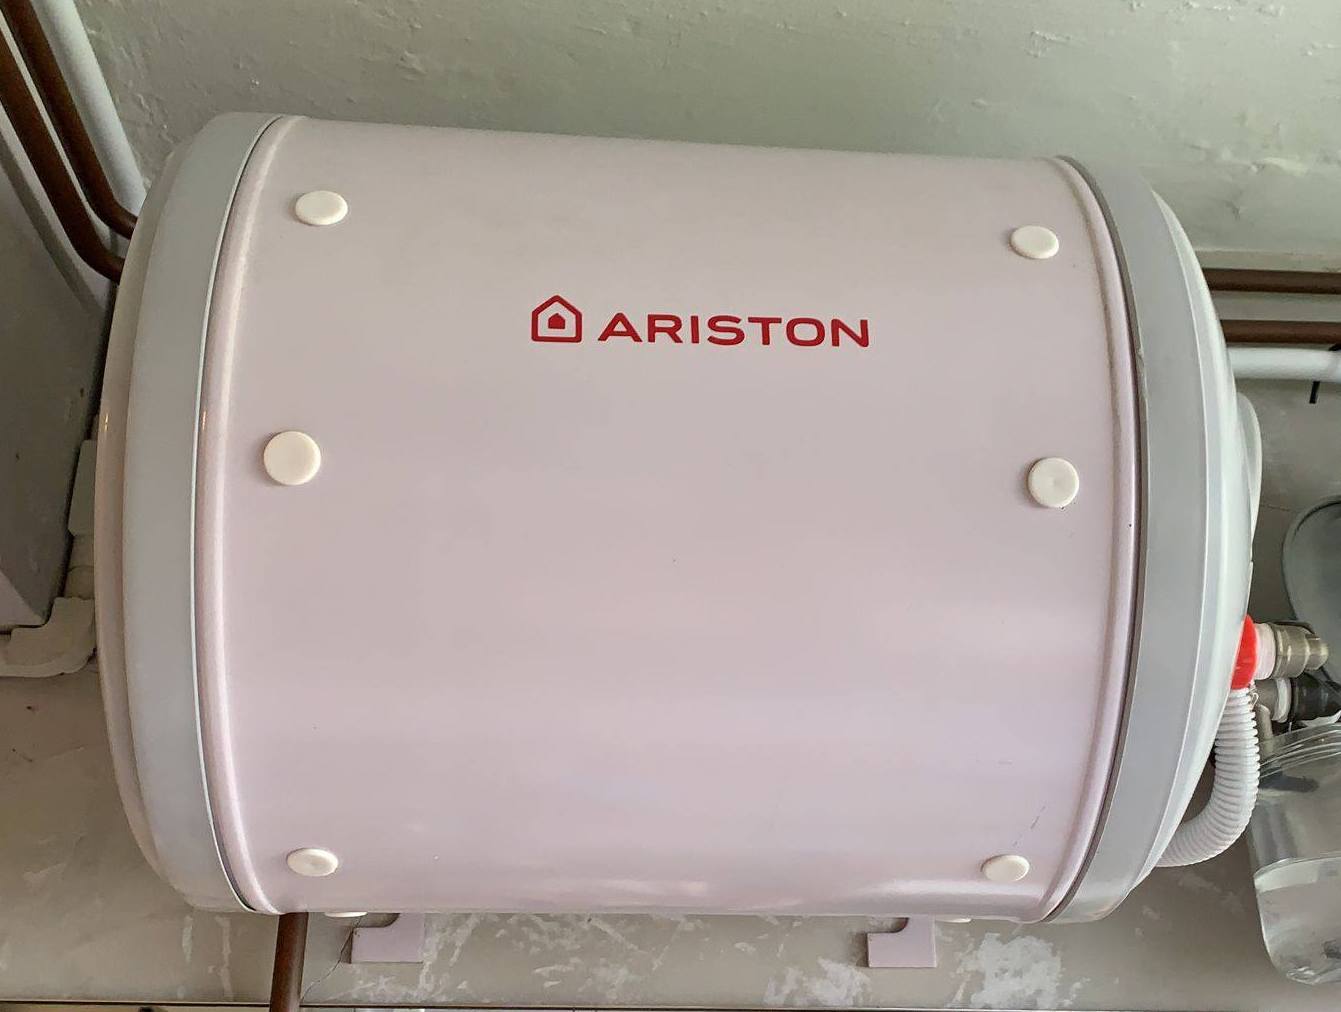 Ariston-storage-water-heater-replacement